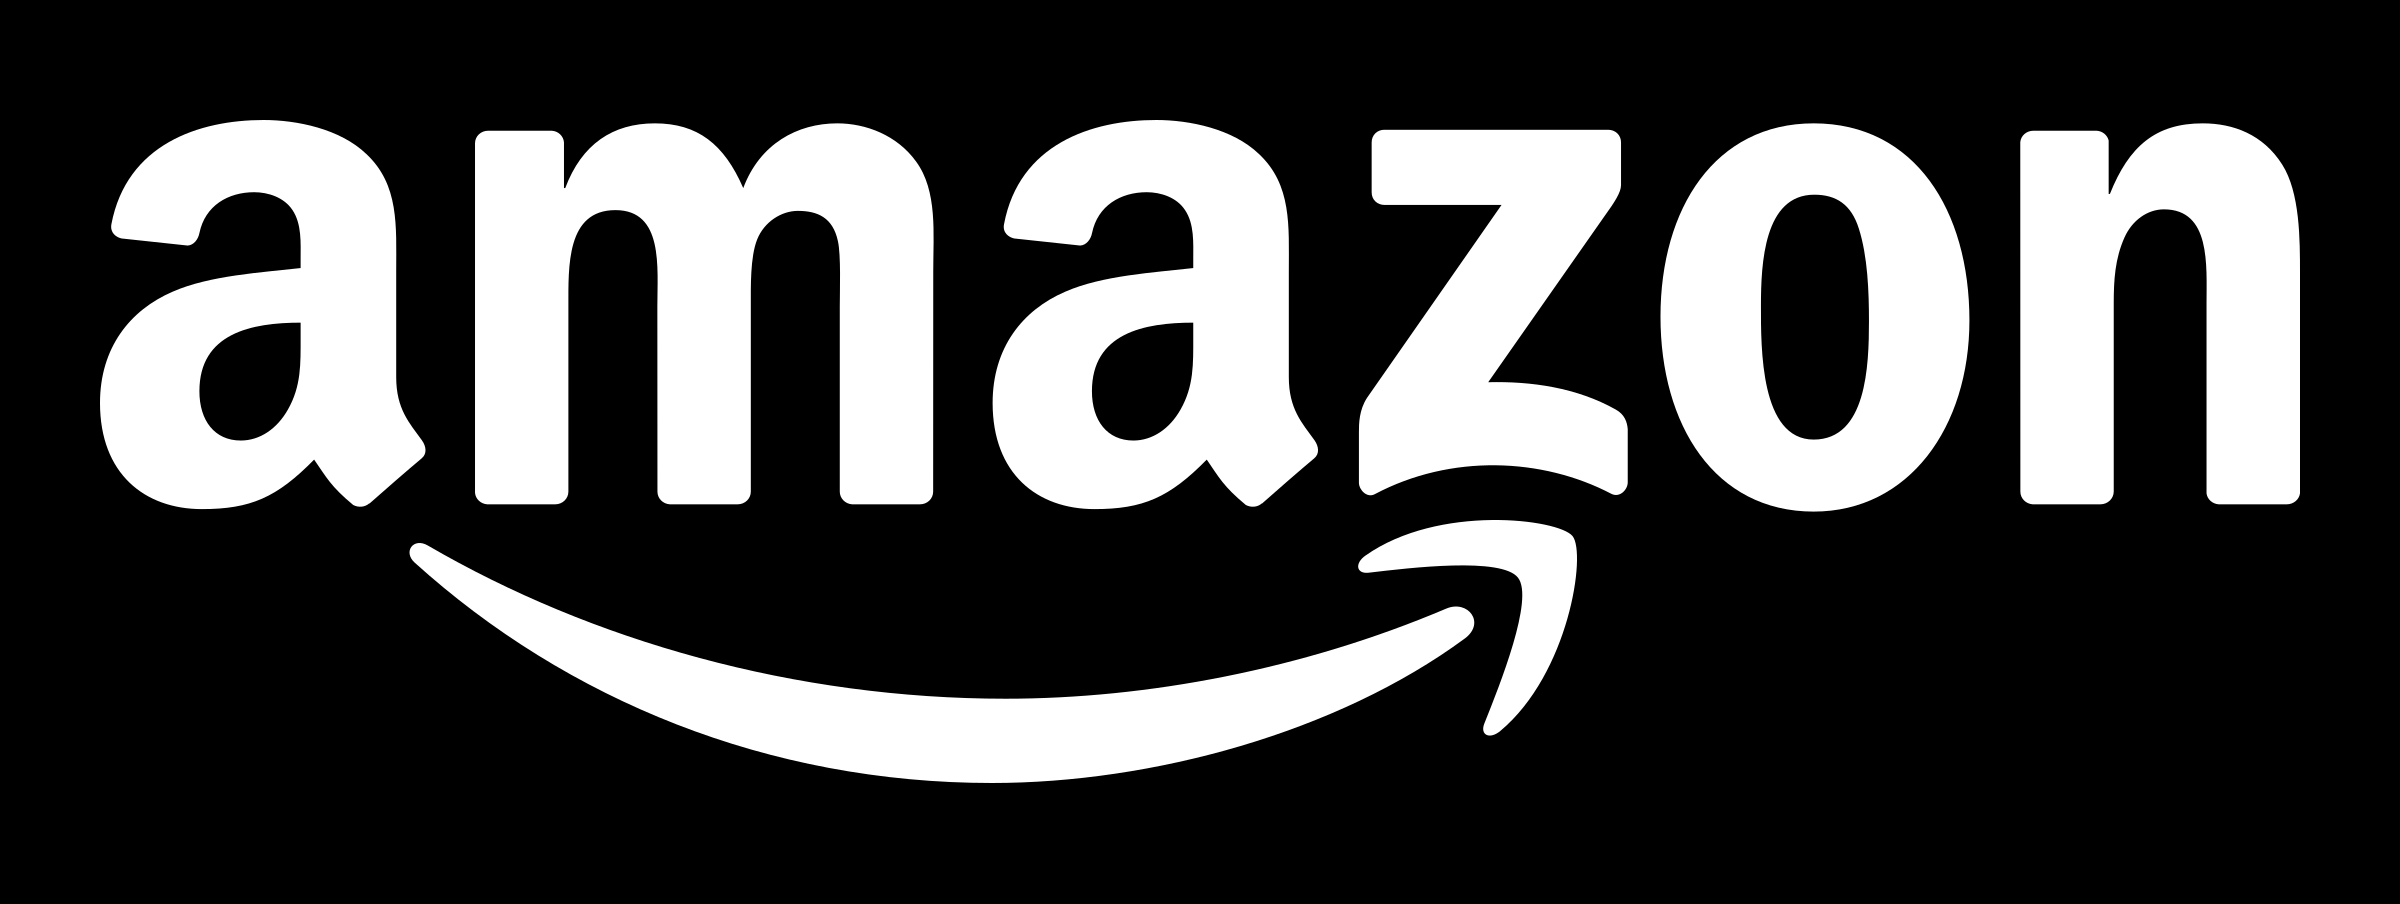 Google Amazon Logo - Amazon Logo PNG Transparent & SVG Vector - Freebie Supply